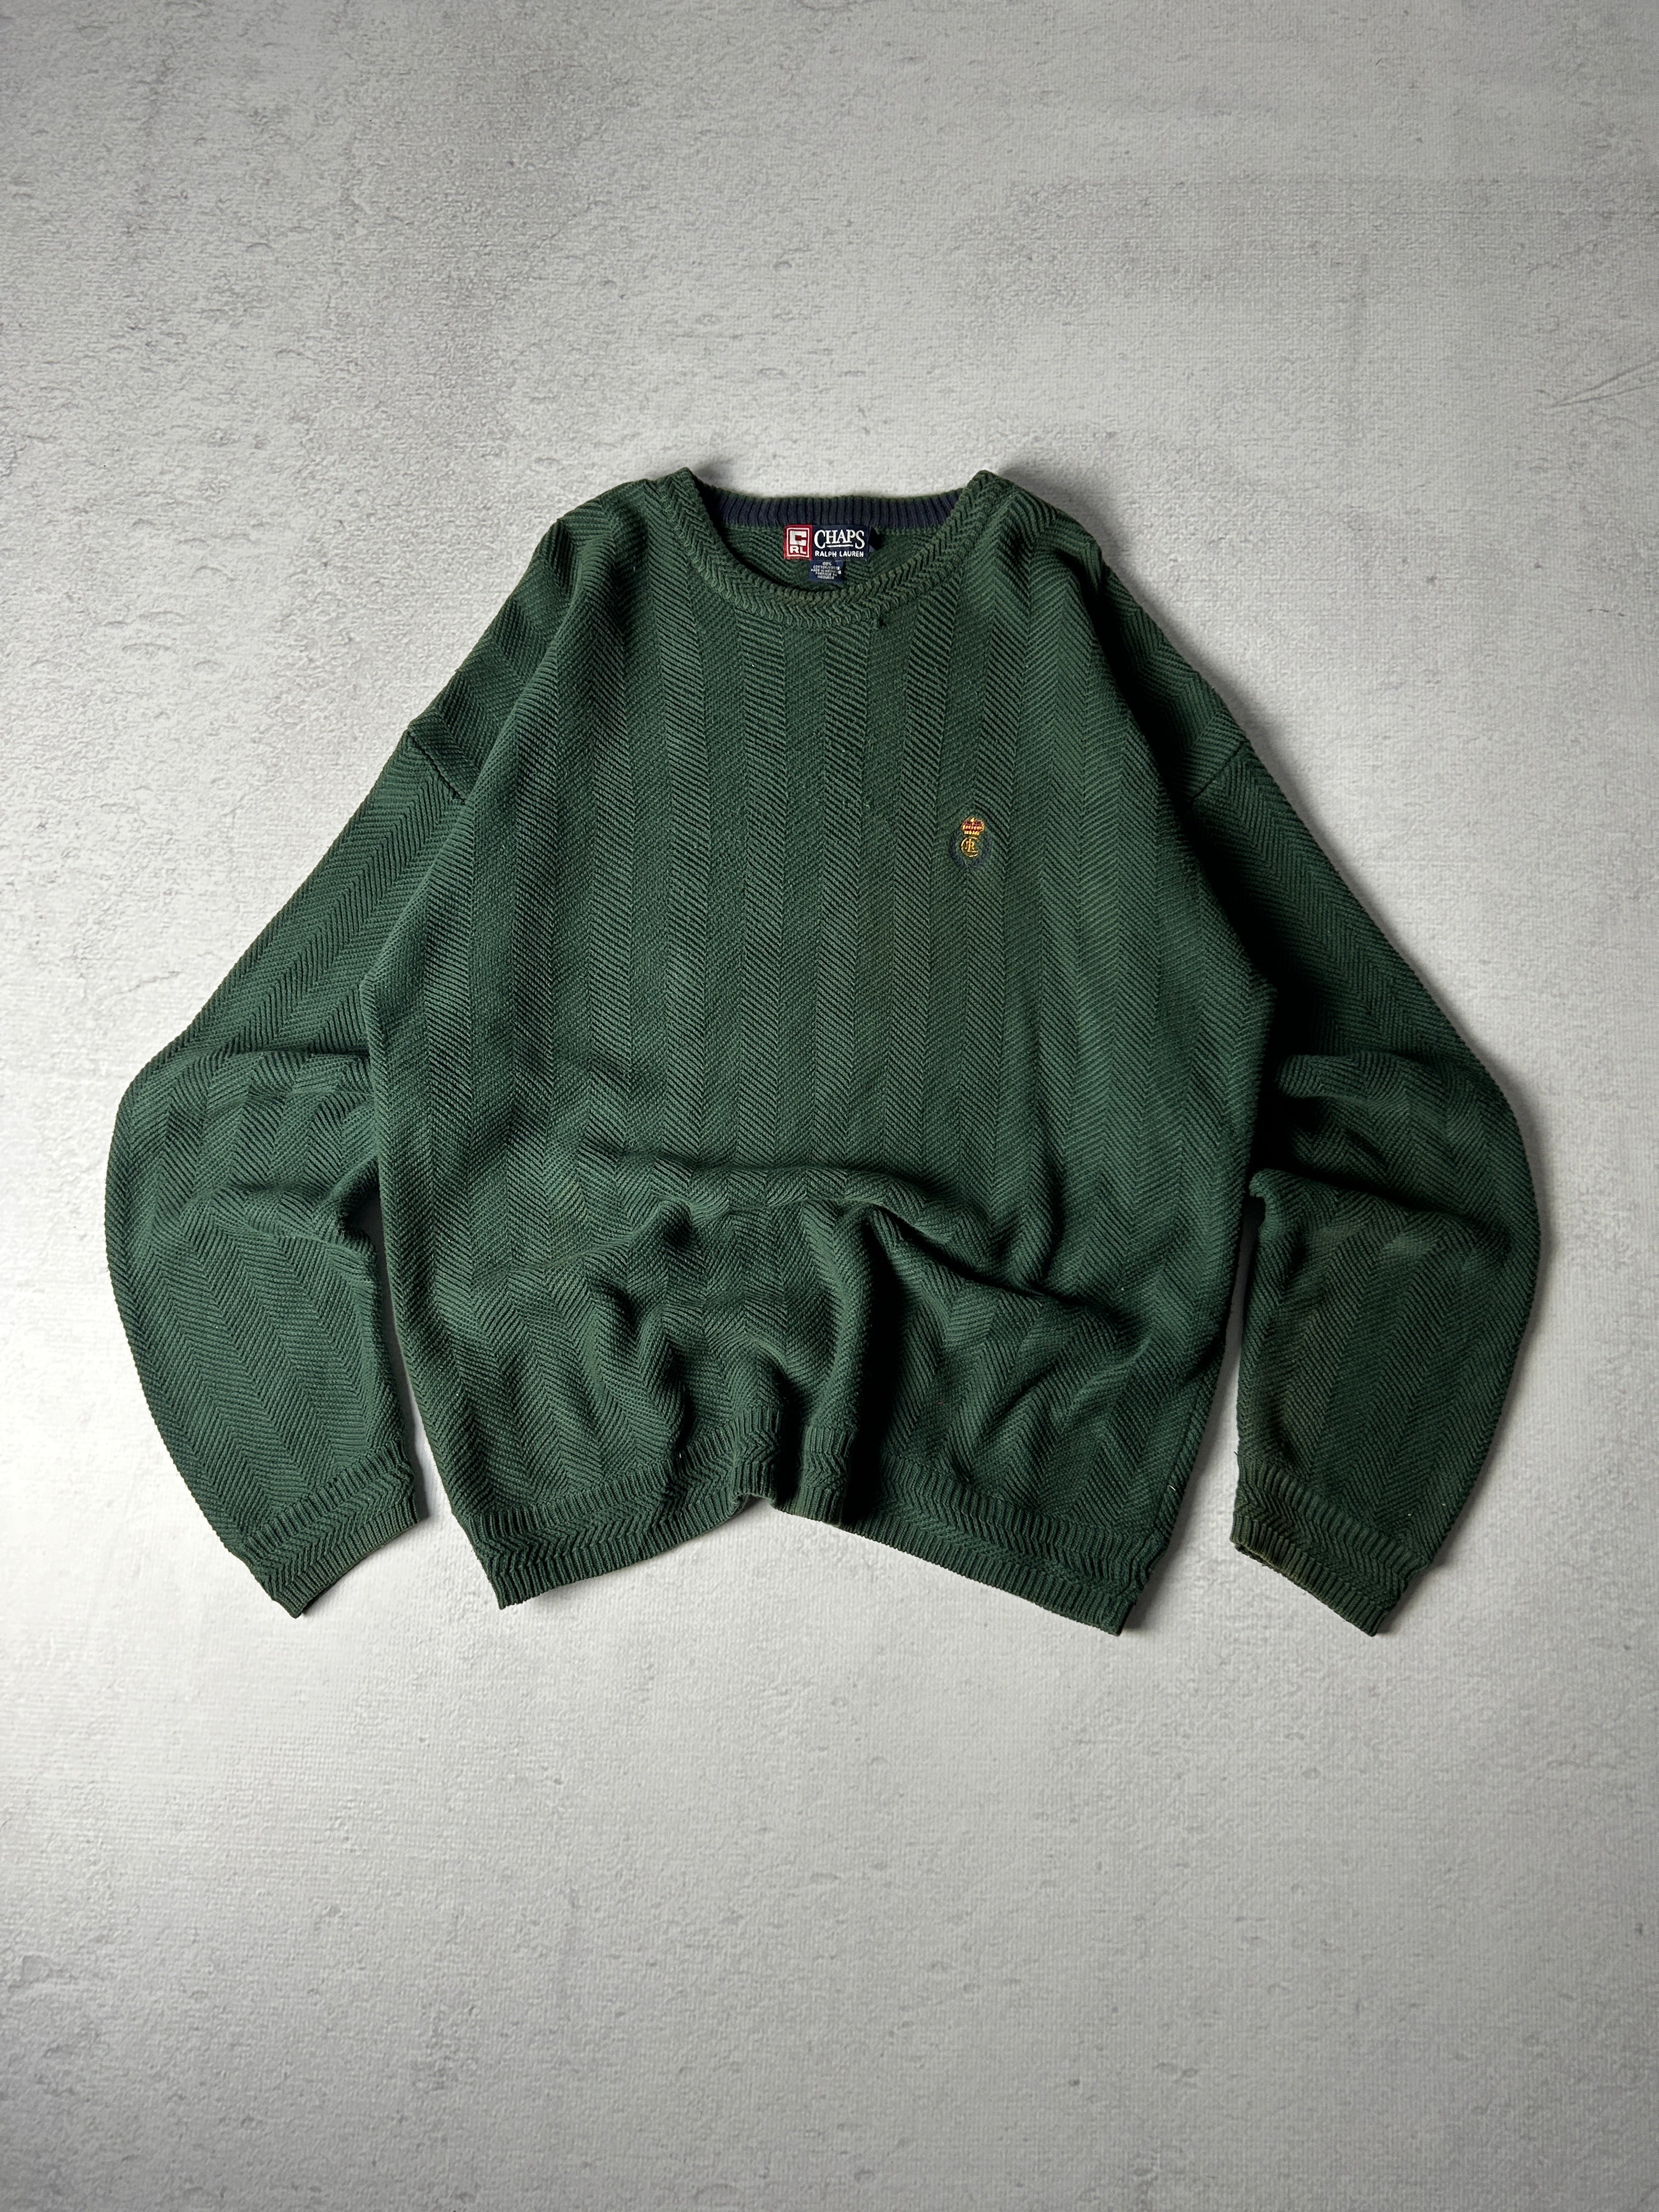 Vintage Chaps Ralph Lauren Knitted Sweater - Men's XL